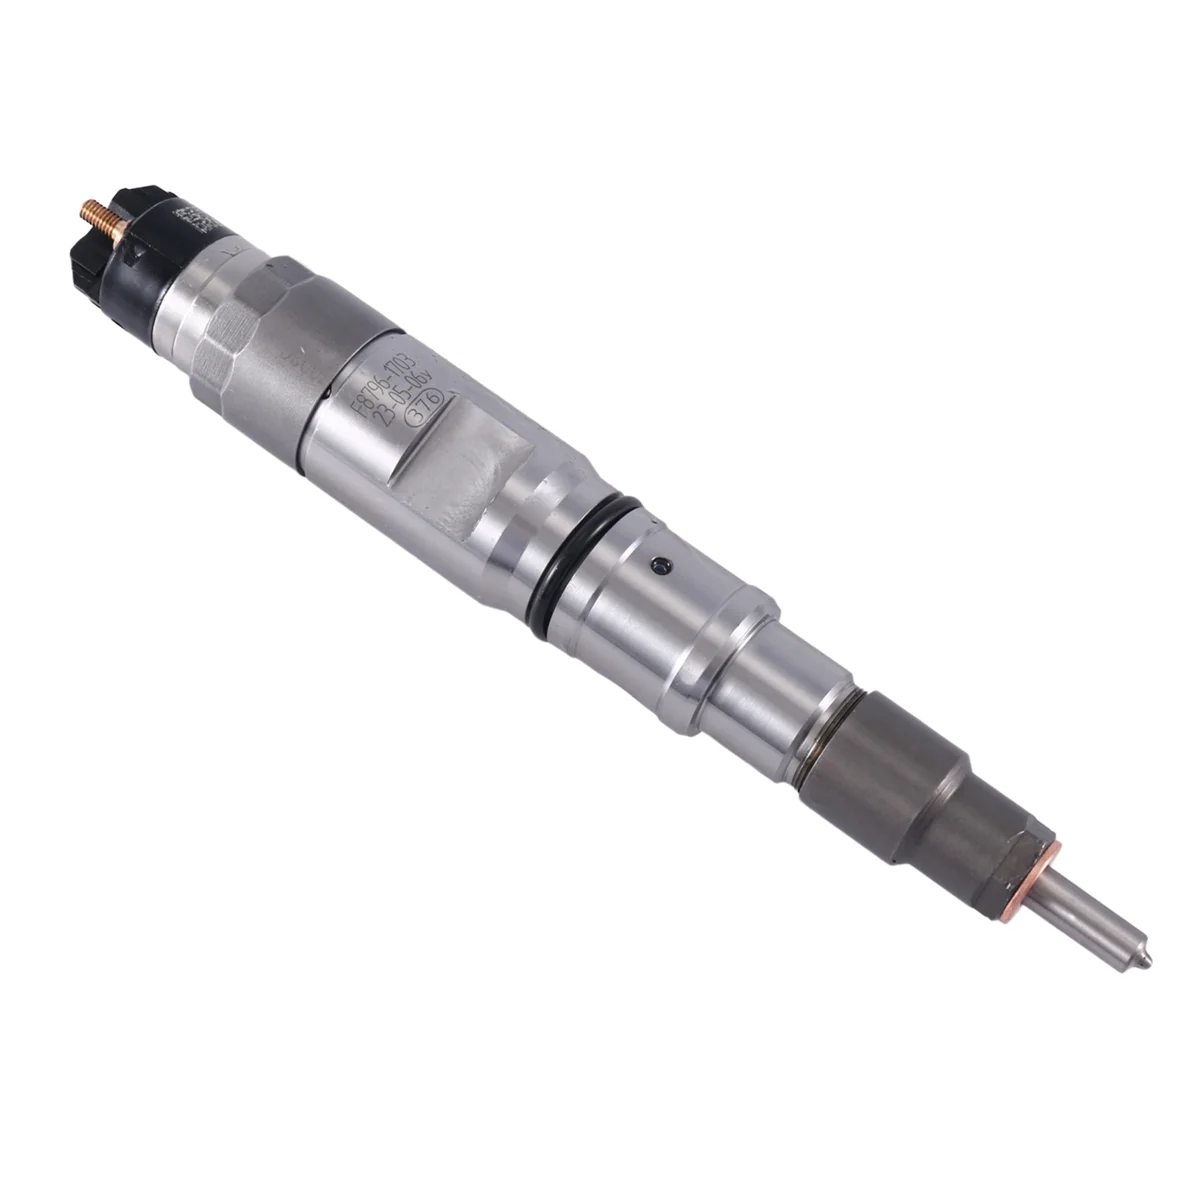 

0445120041 New Crude Oil Fuel Injector Nozzle for Bosch for DAEWOO DOOSAN 65.10401-7002C 107755-0400